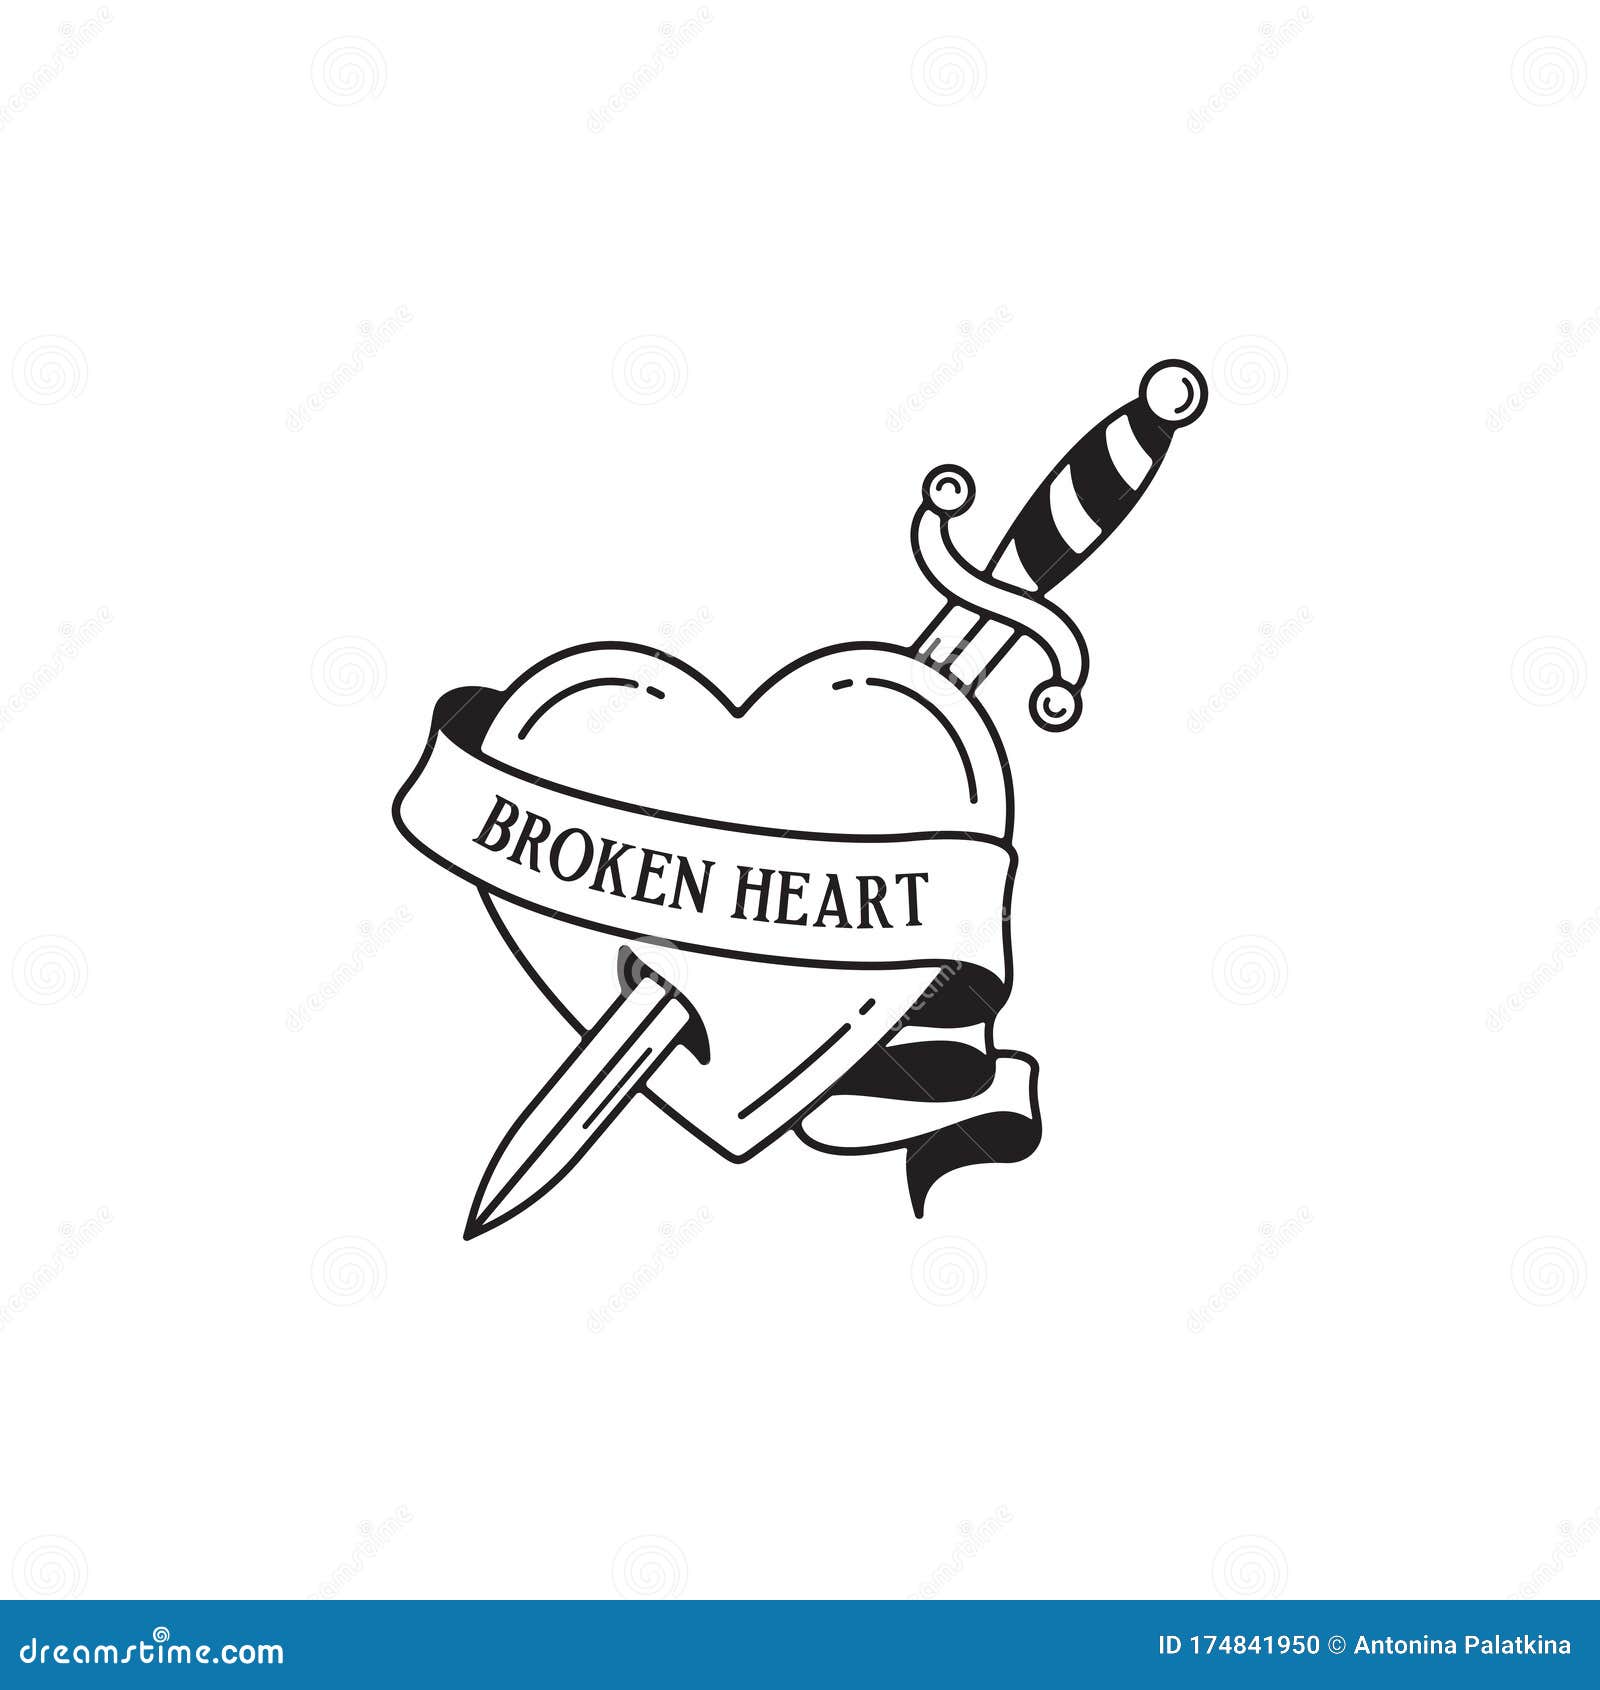 120 Broken Heart Tattoo Stock Photos Pictures  RoyaltyFree Images   iStock